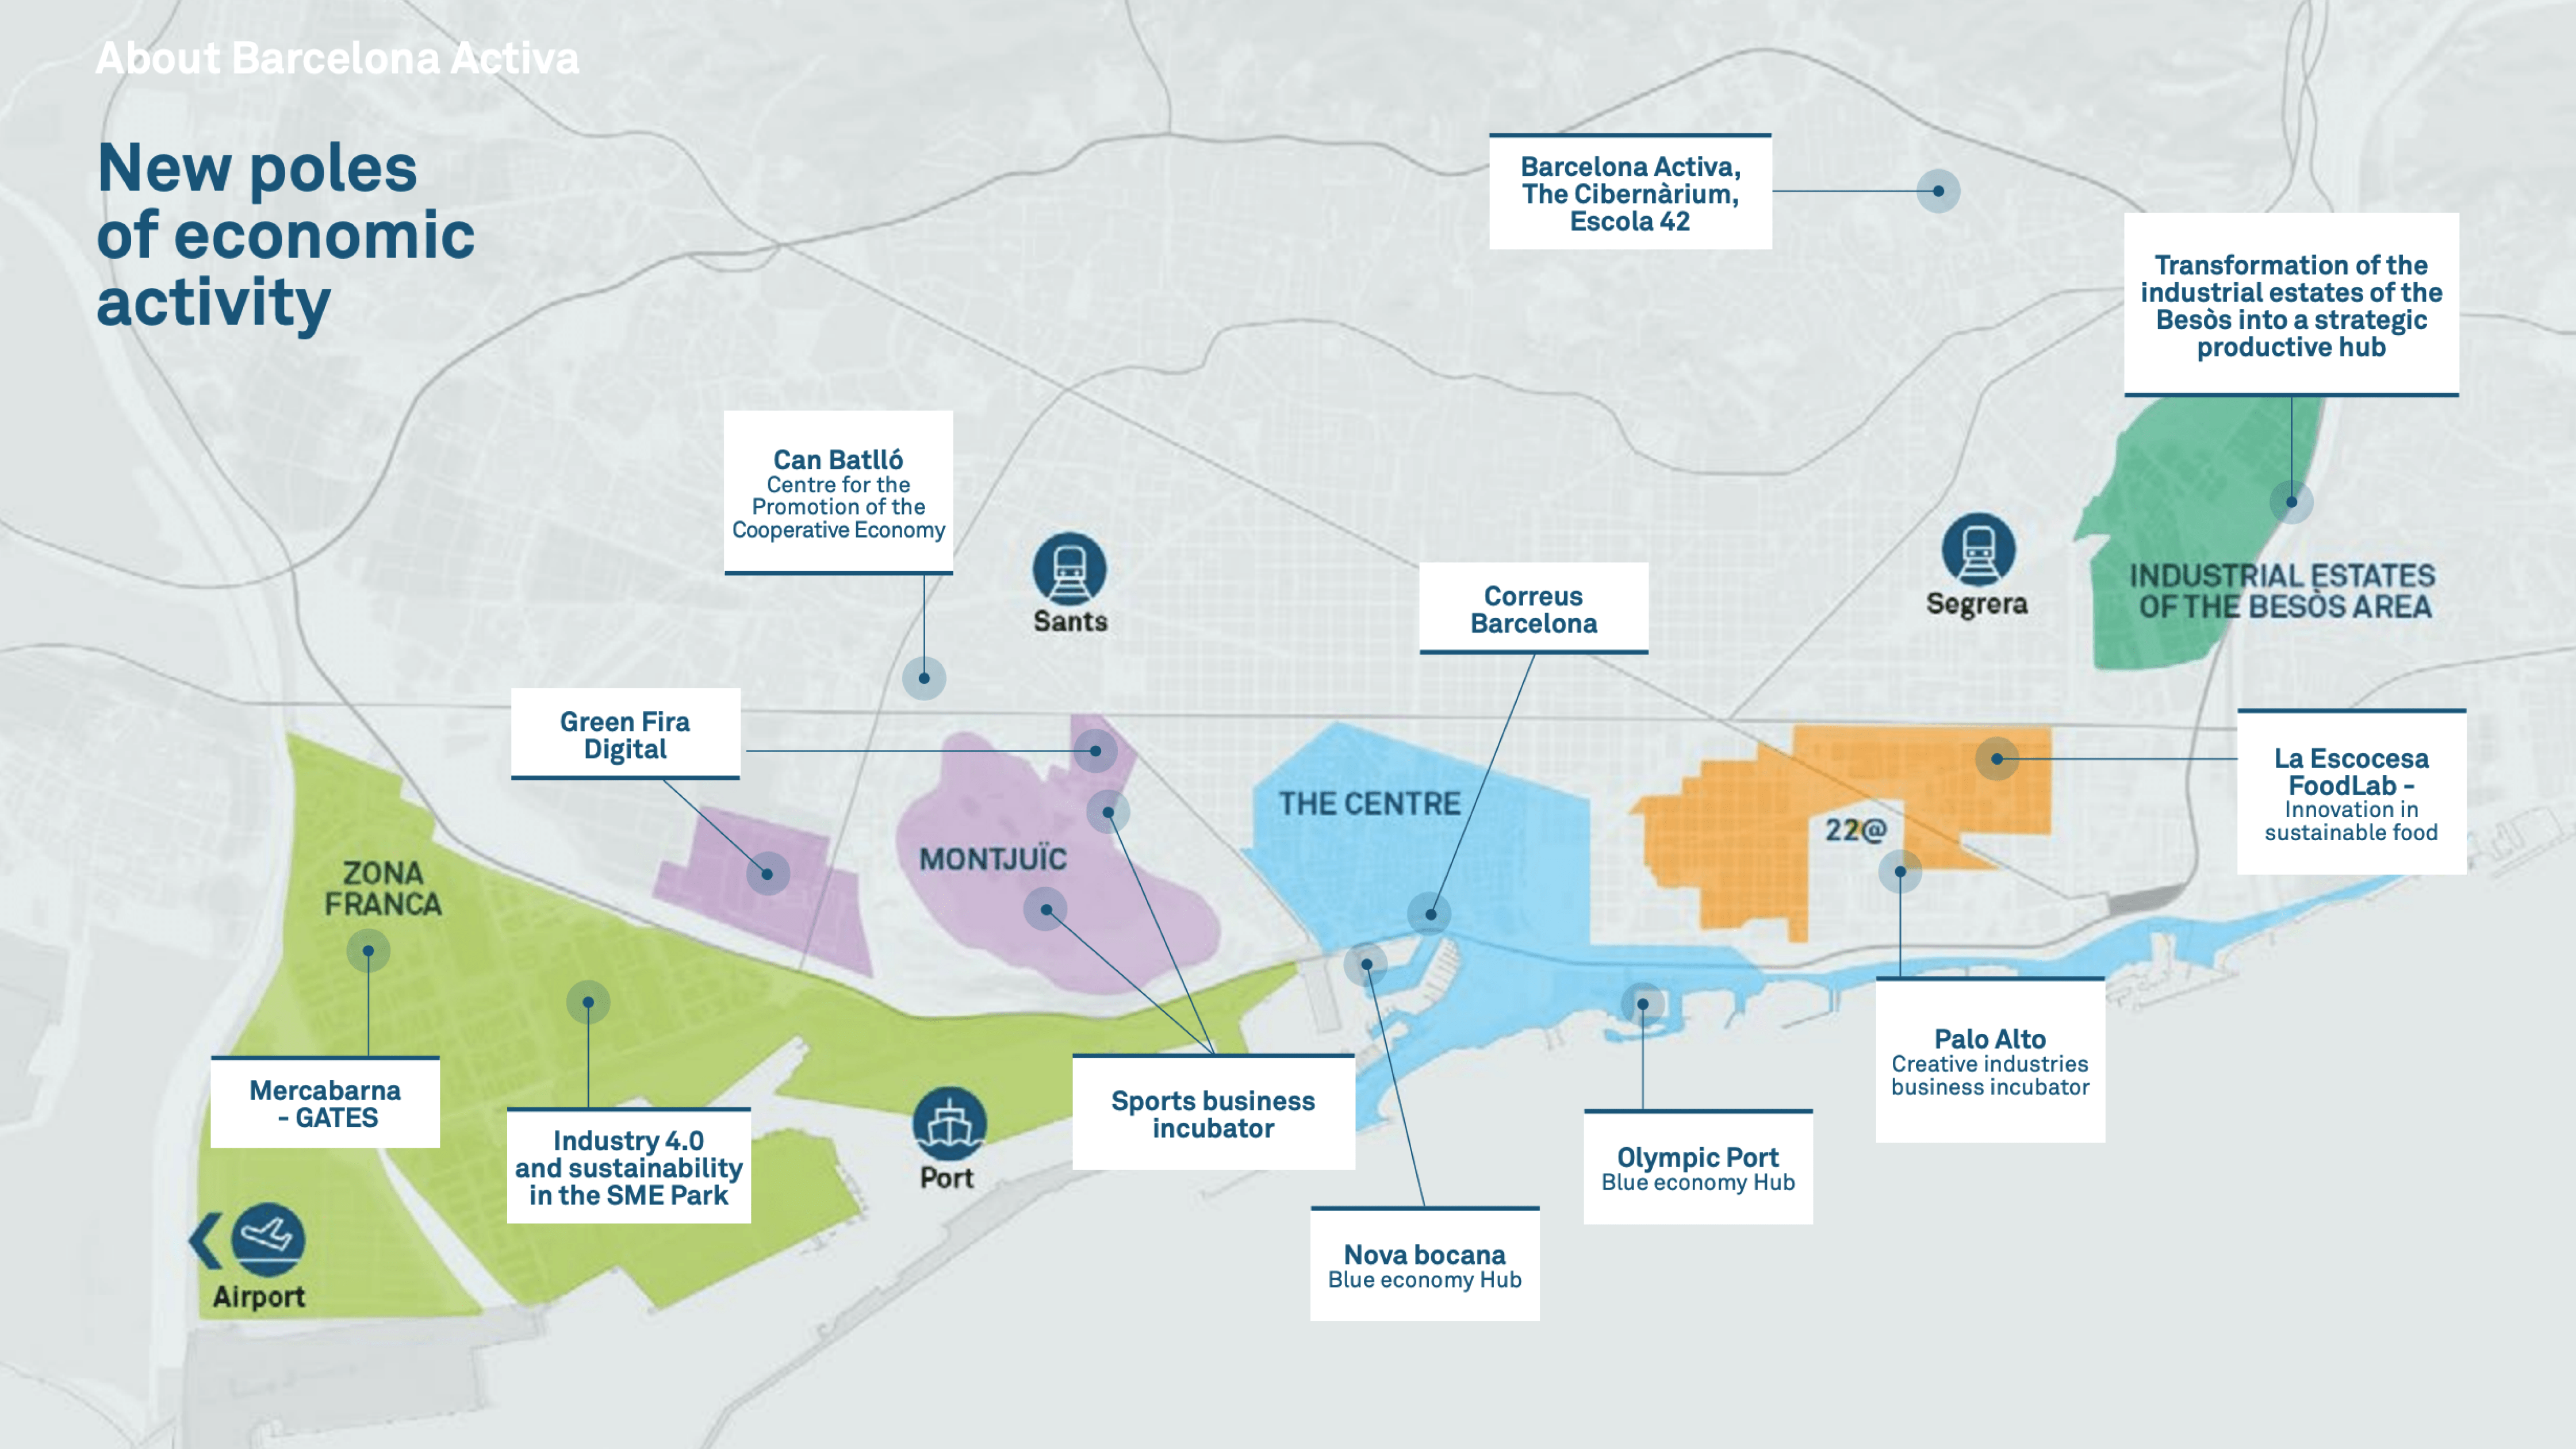 Barcelona Activa’s network of facilities